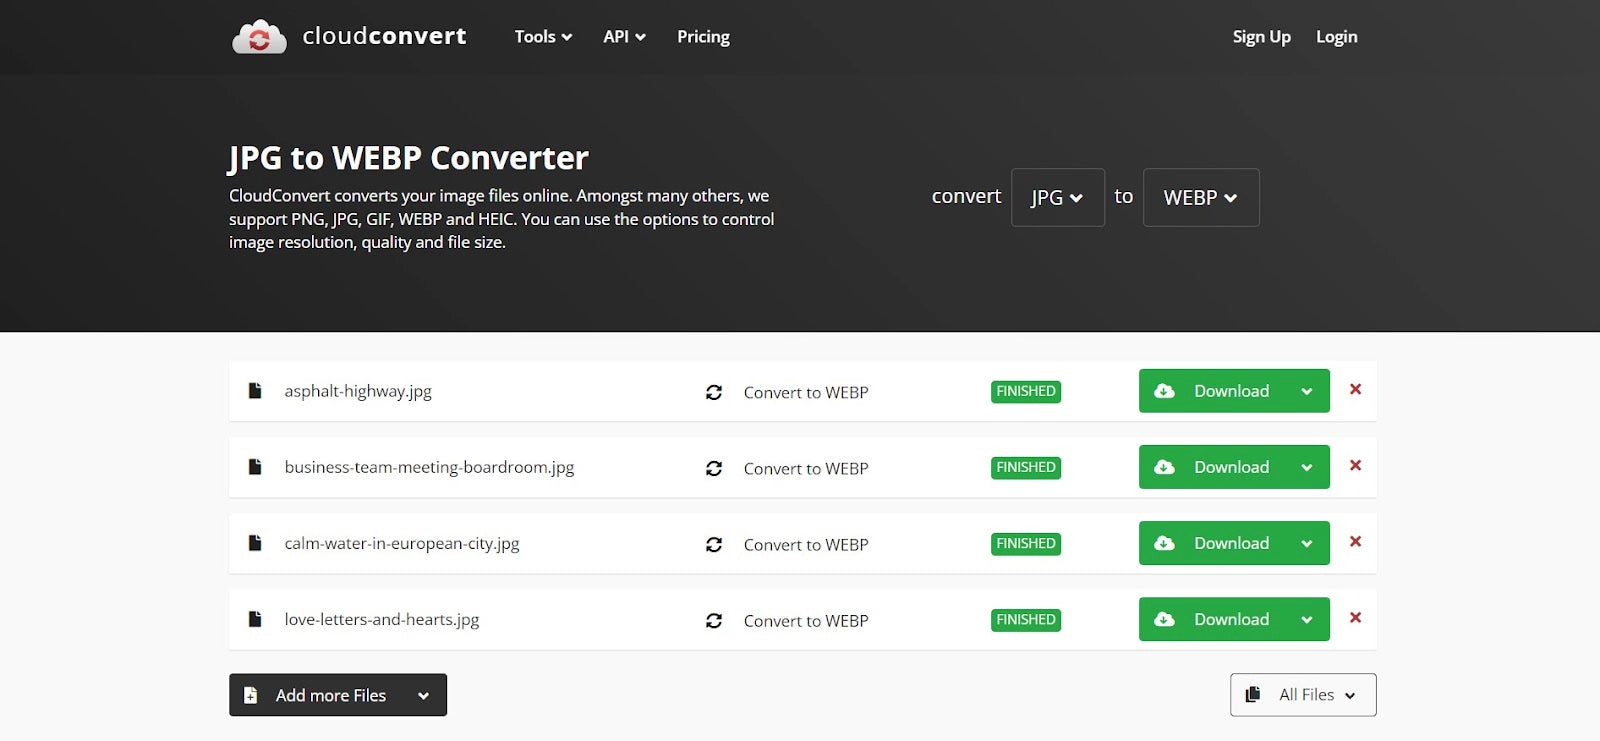 CloudConvert’s JPG to WebP Converter tool